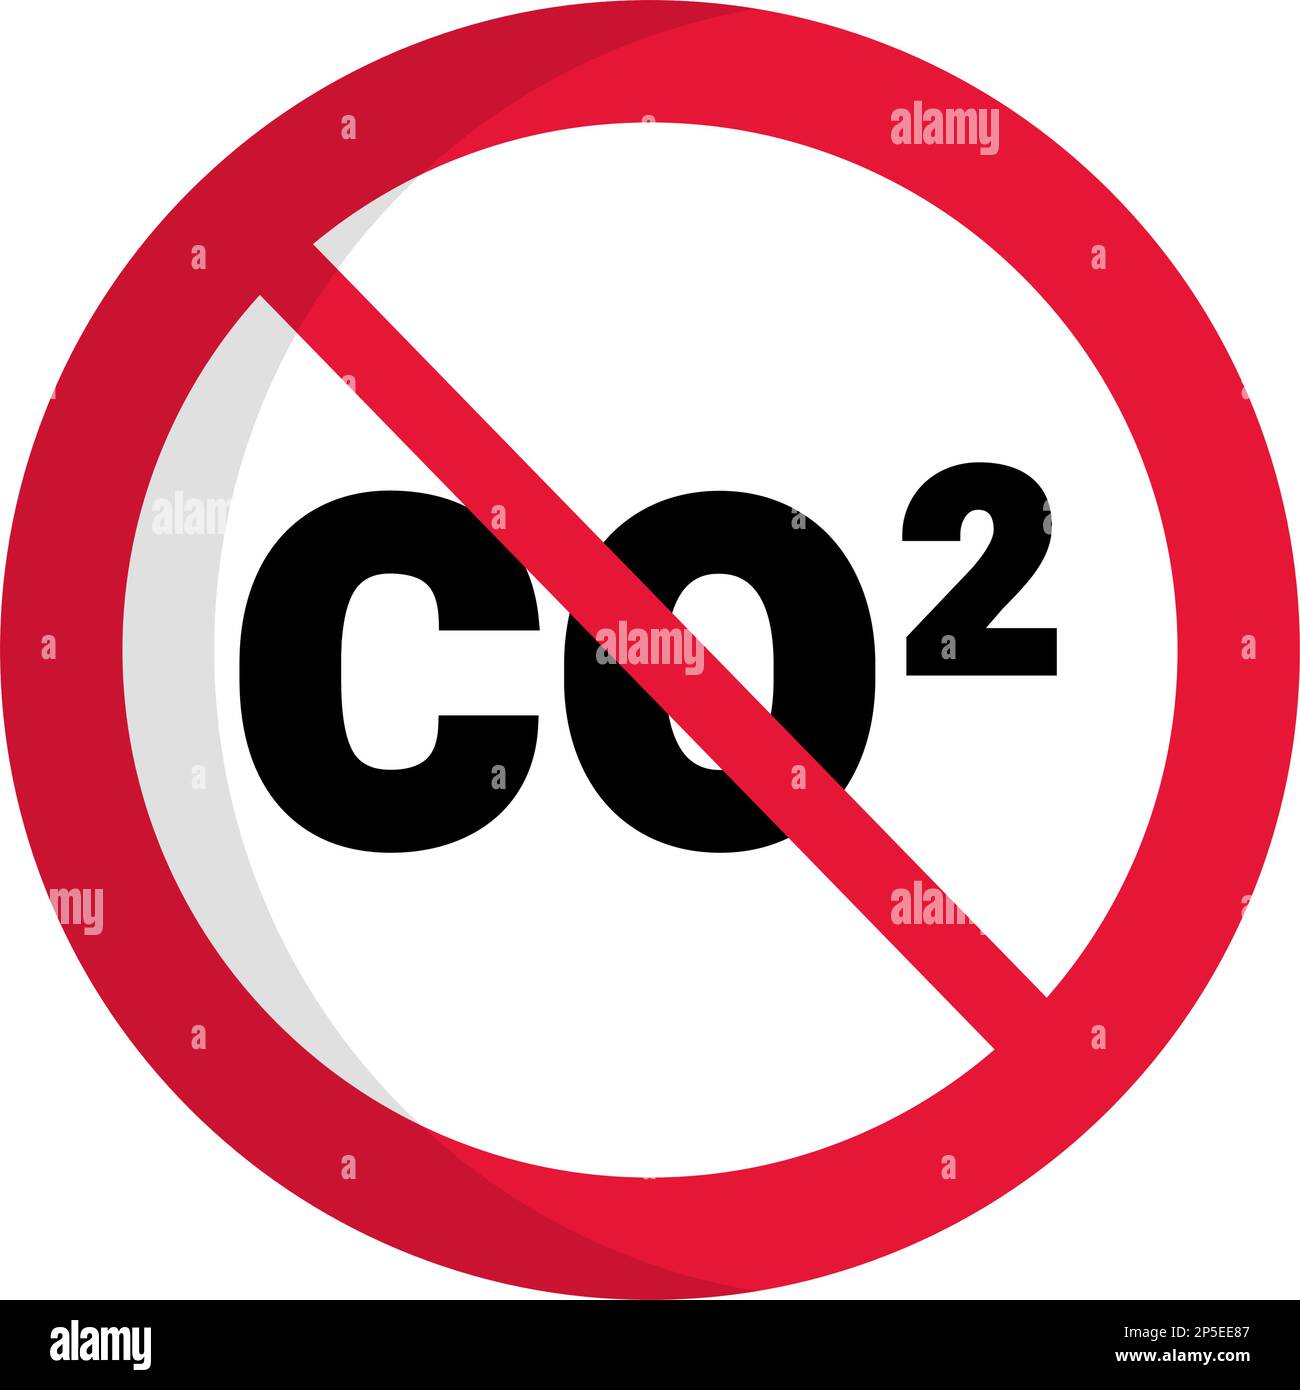 CO2 Regulierung und Beschränkung. Kohlendioxidreduzierung. Bearbeitbarer Vektor. Stock Vektor